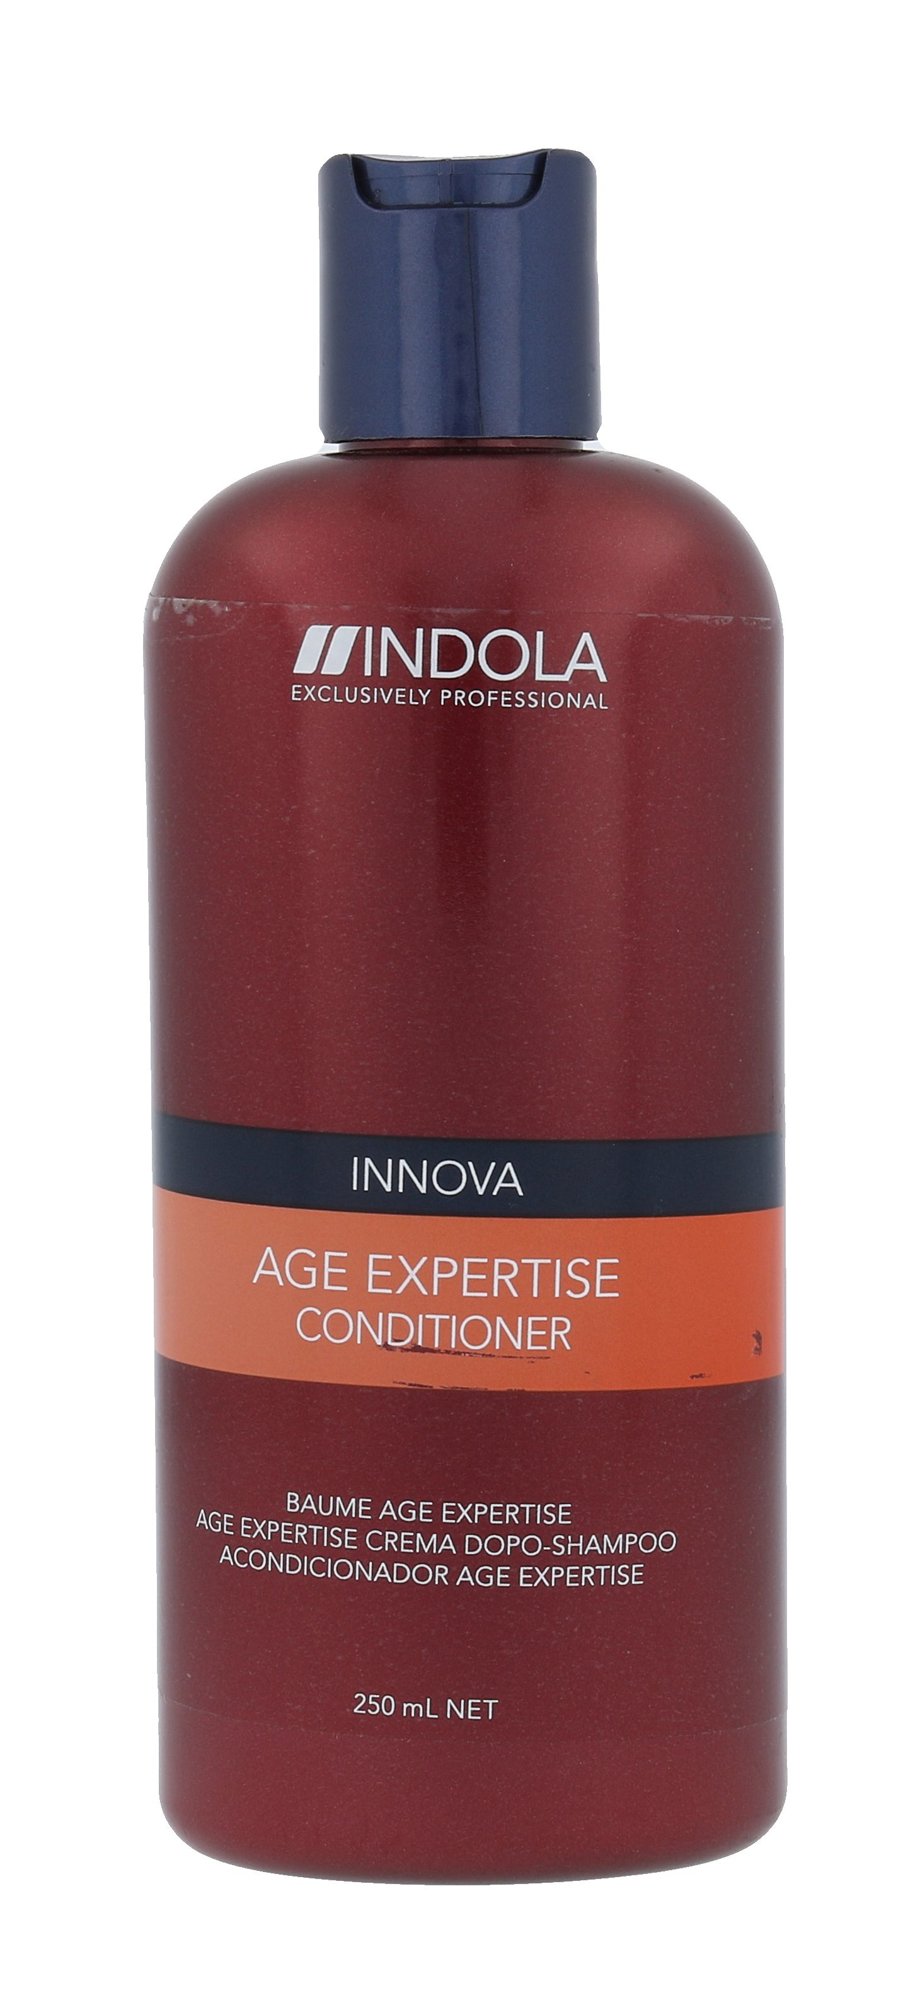 Indola Innova Age Expertise 250ml kondicionierius